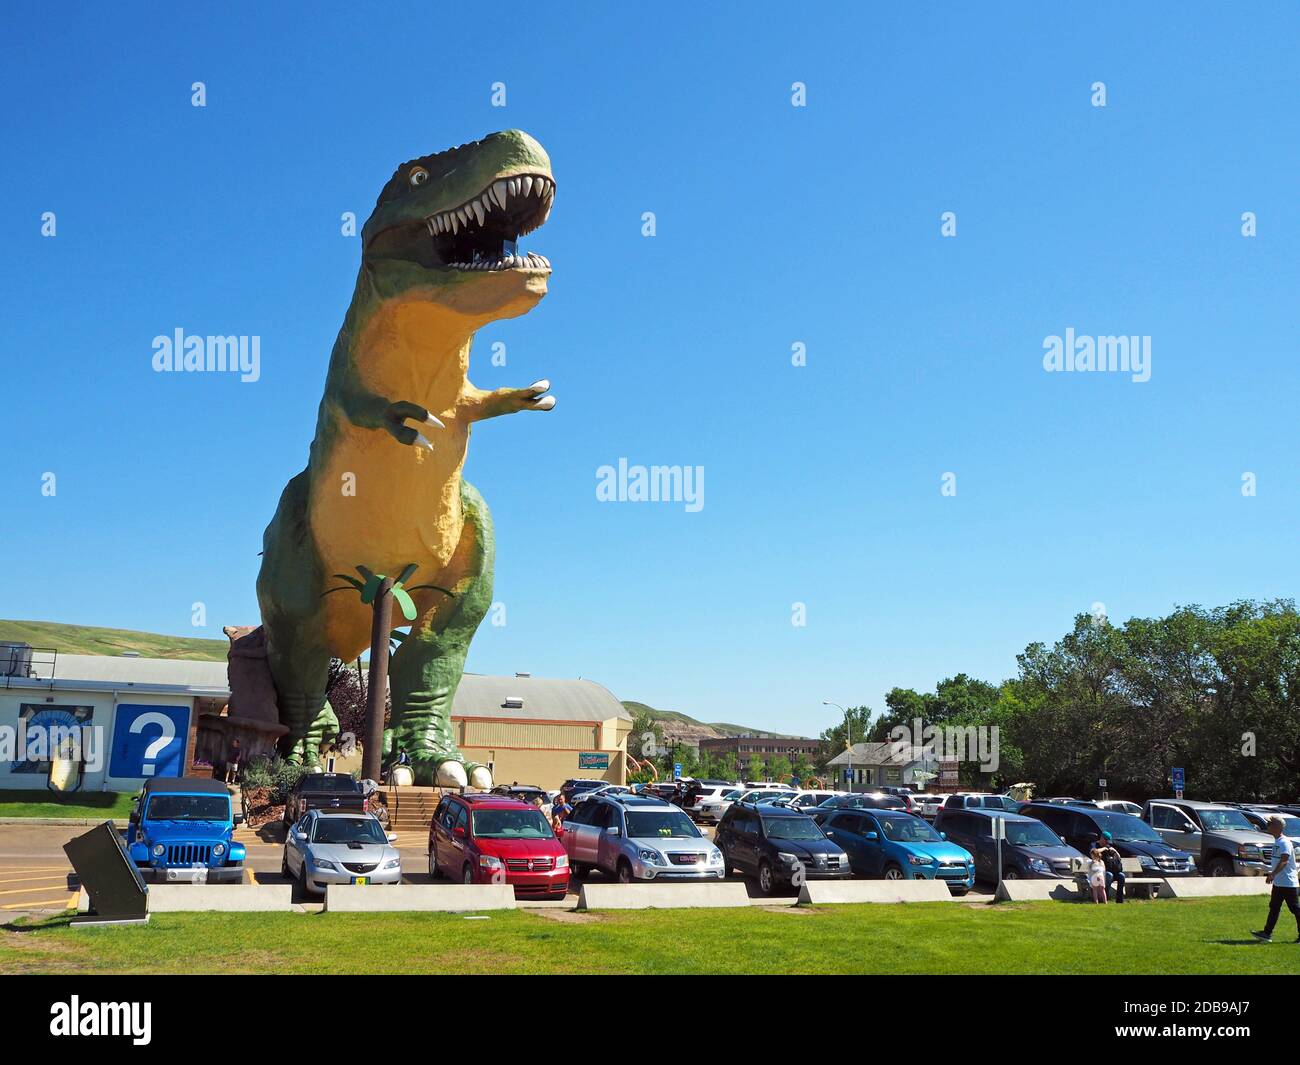 'The Worlds Largest Dinosaur' - Tyrannosaurus rex statue at Drumheller, Alberta, Canada Stock Photo